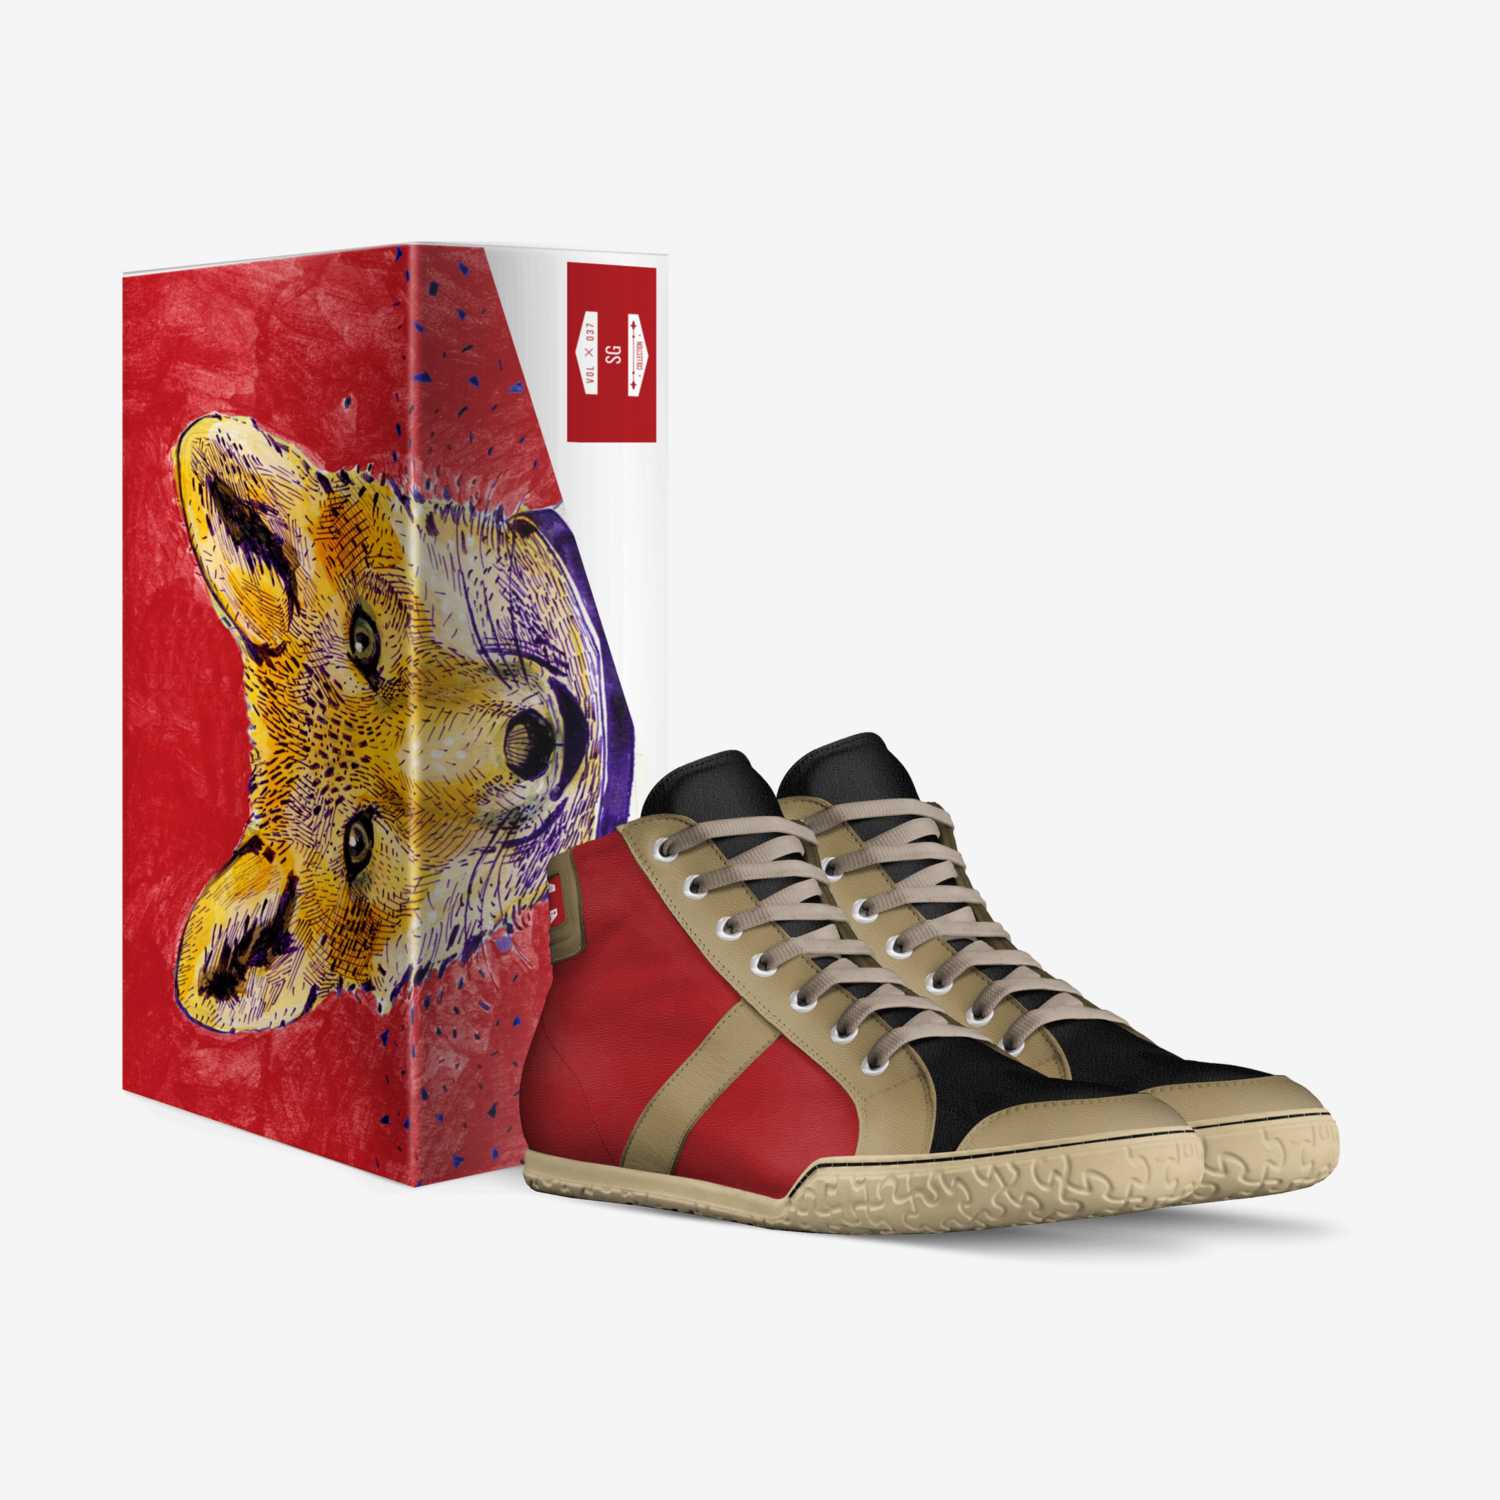 SG custom made in Italy shoes by Joshua Jordan | Box view